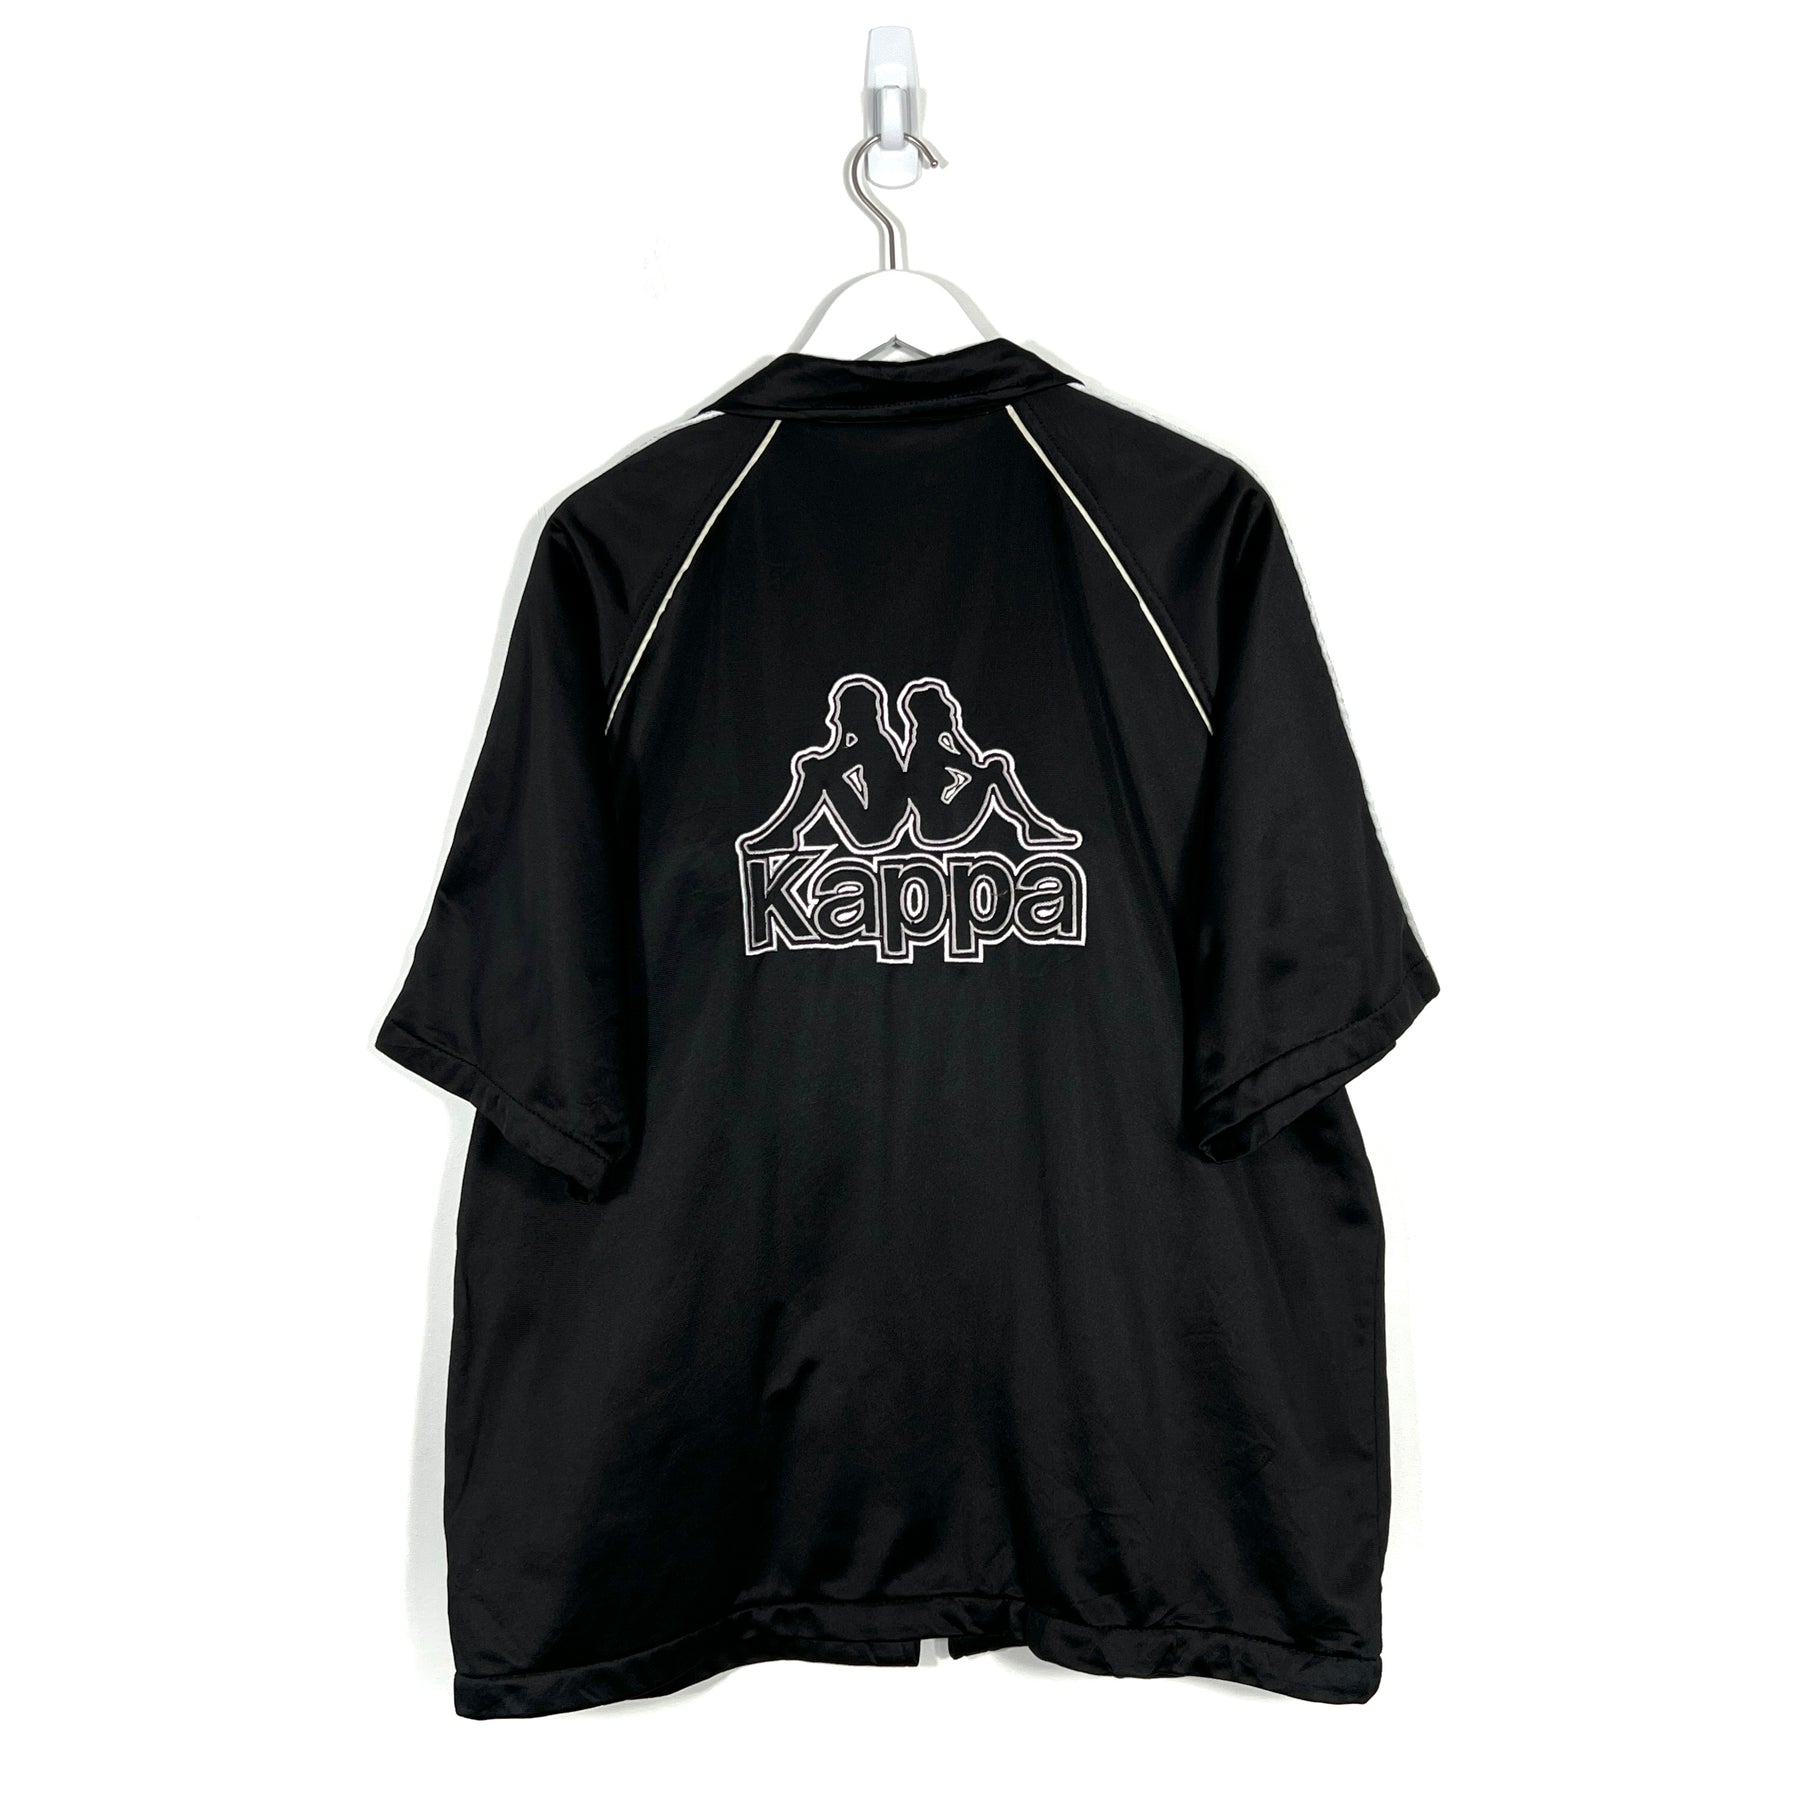 Vintage Kappa Track Jacket - Men's Large